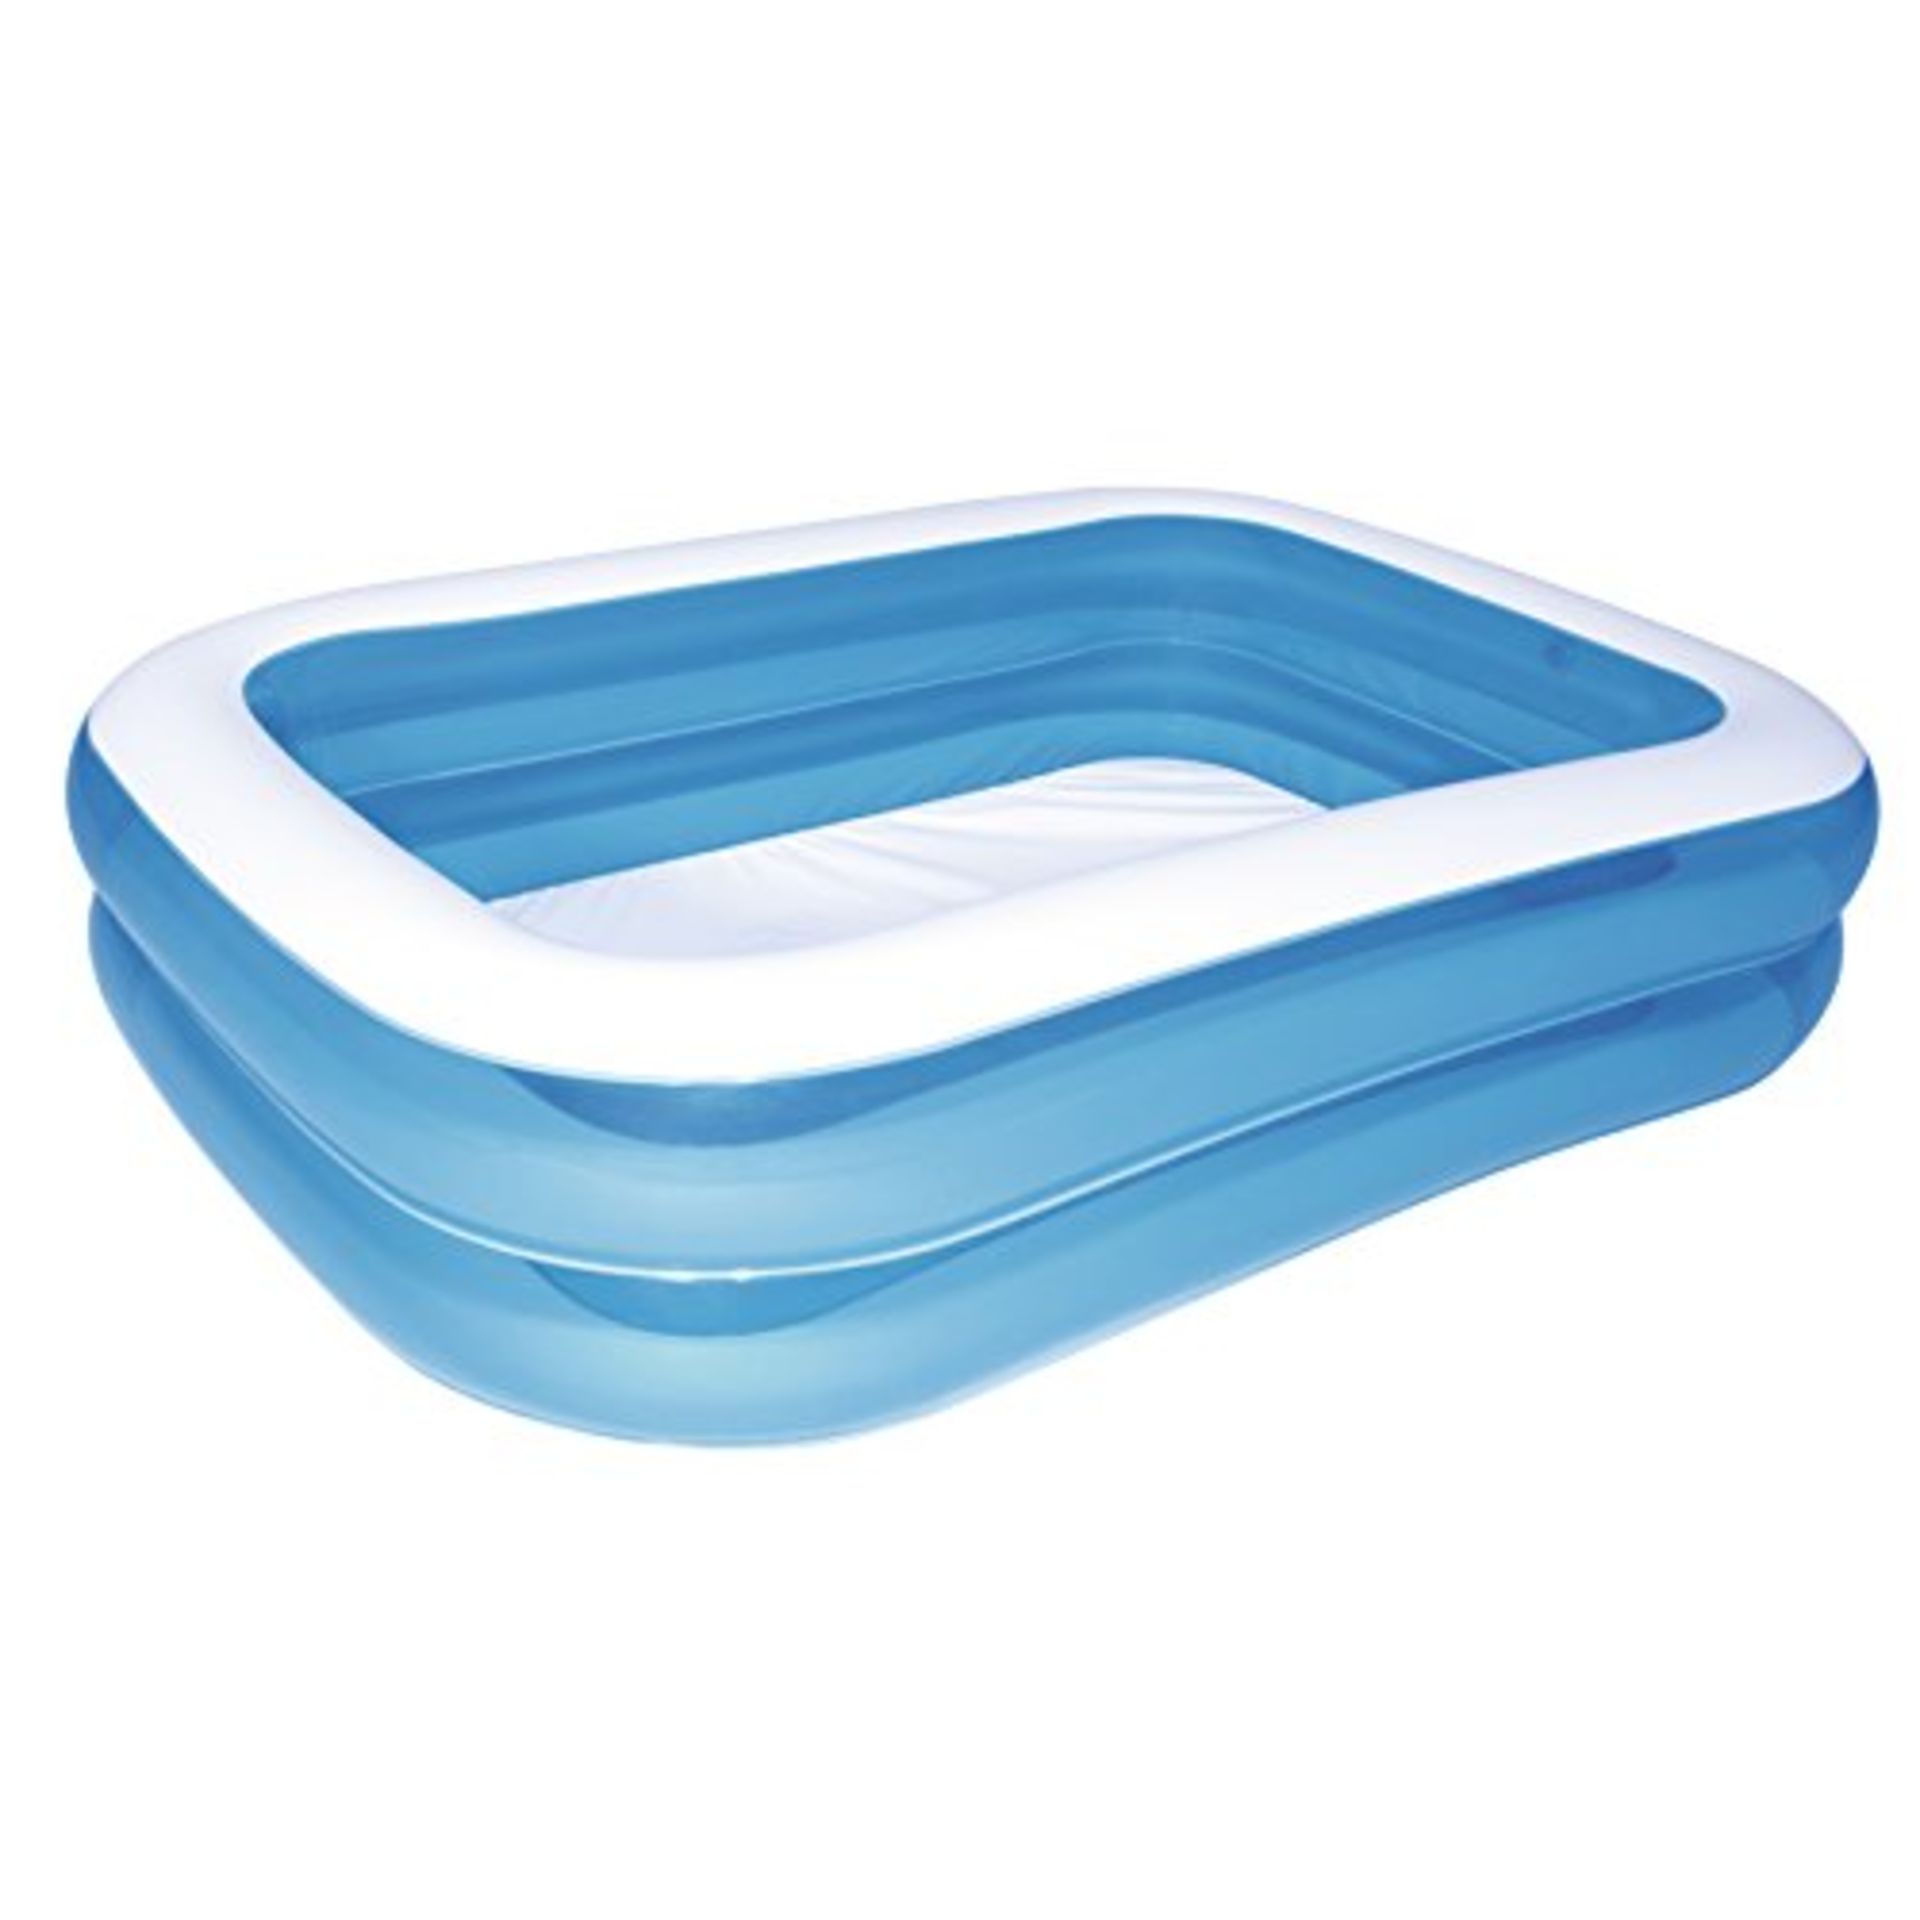 Bestway - Deluxe blue rectangular inflatable pool, 211 x 132 x 46 cm